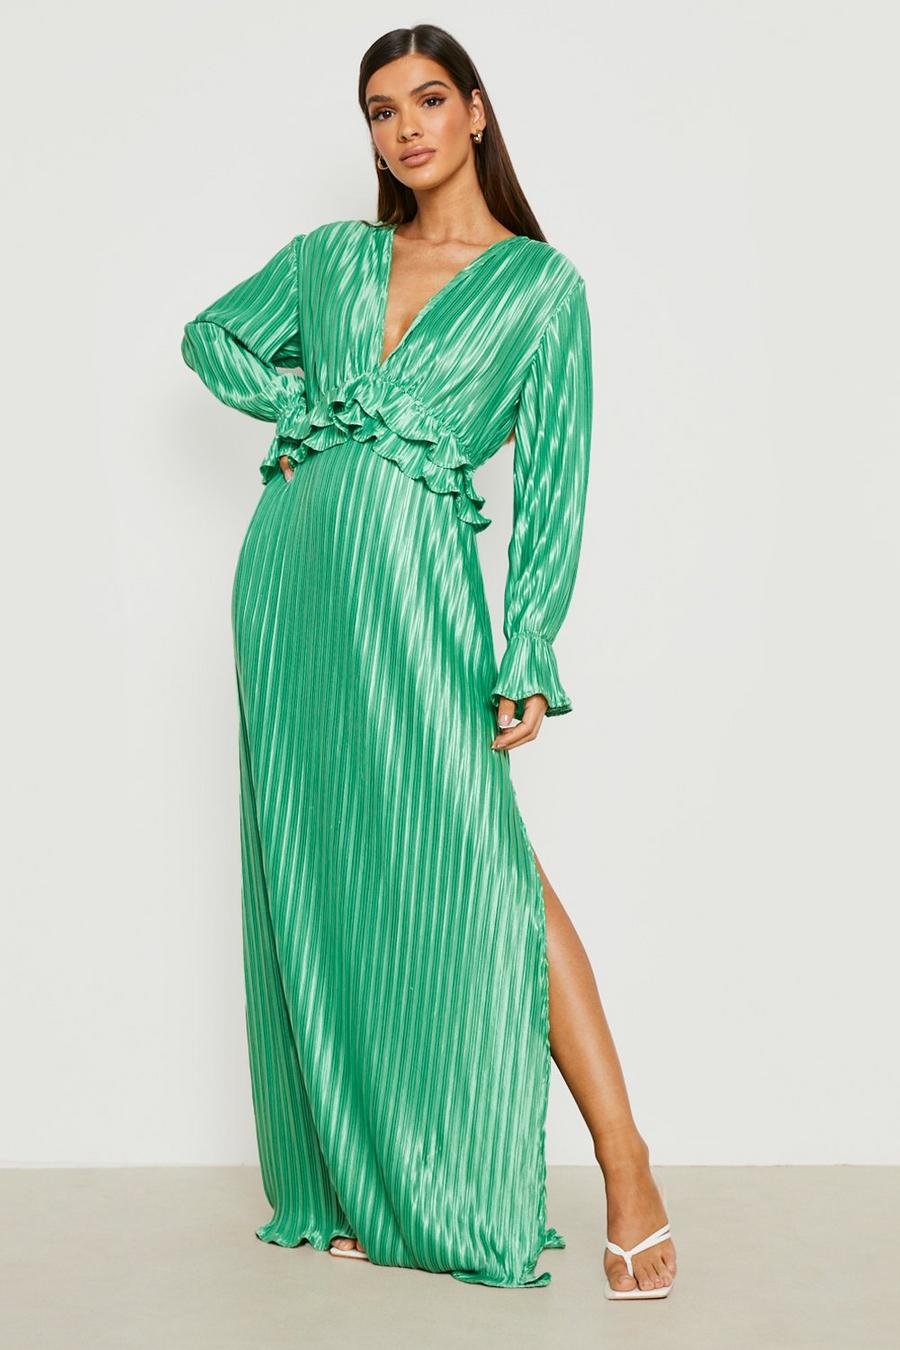 Green שמלת מקסי עם קפלים, ומחשוף עמוק ועיטור מלמלה